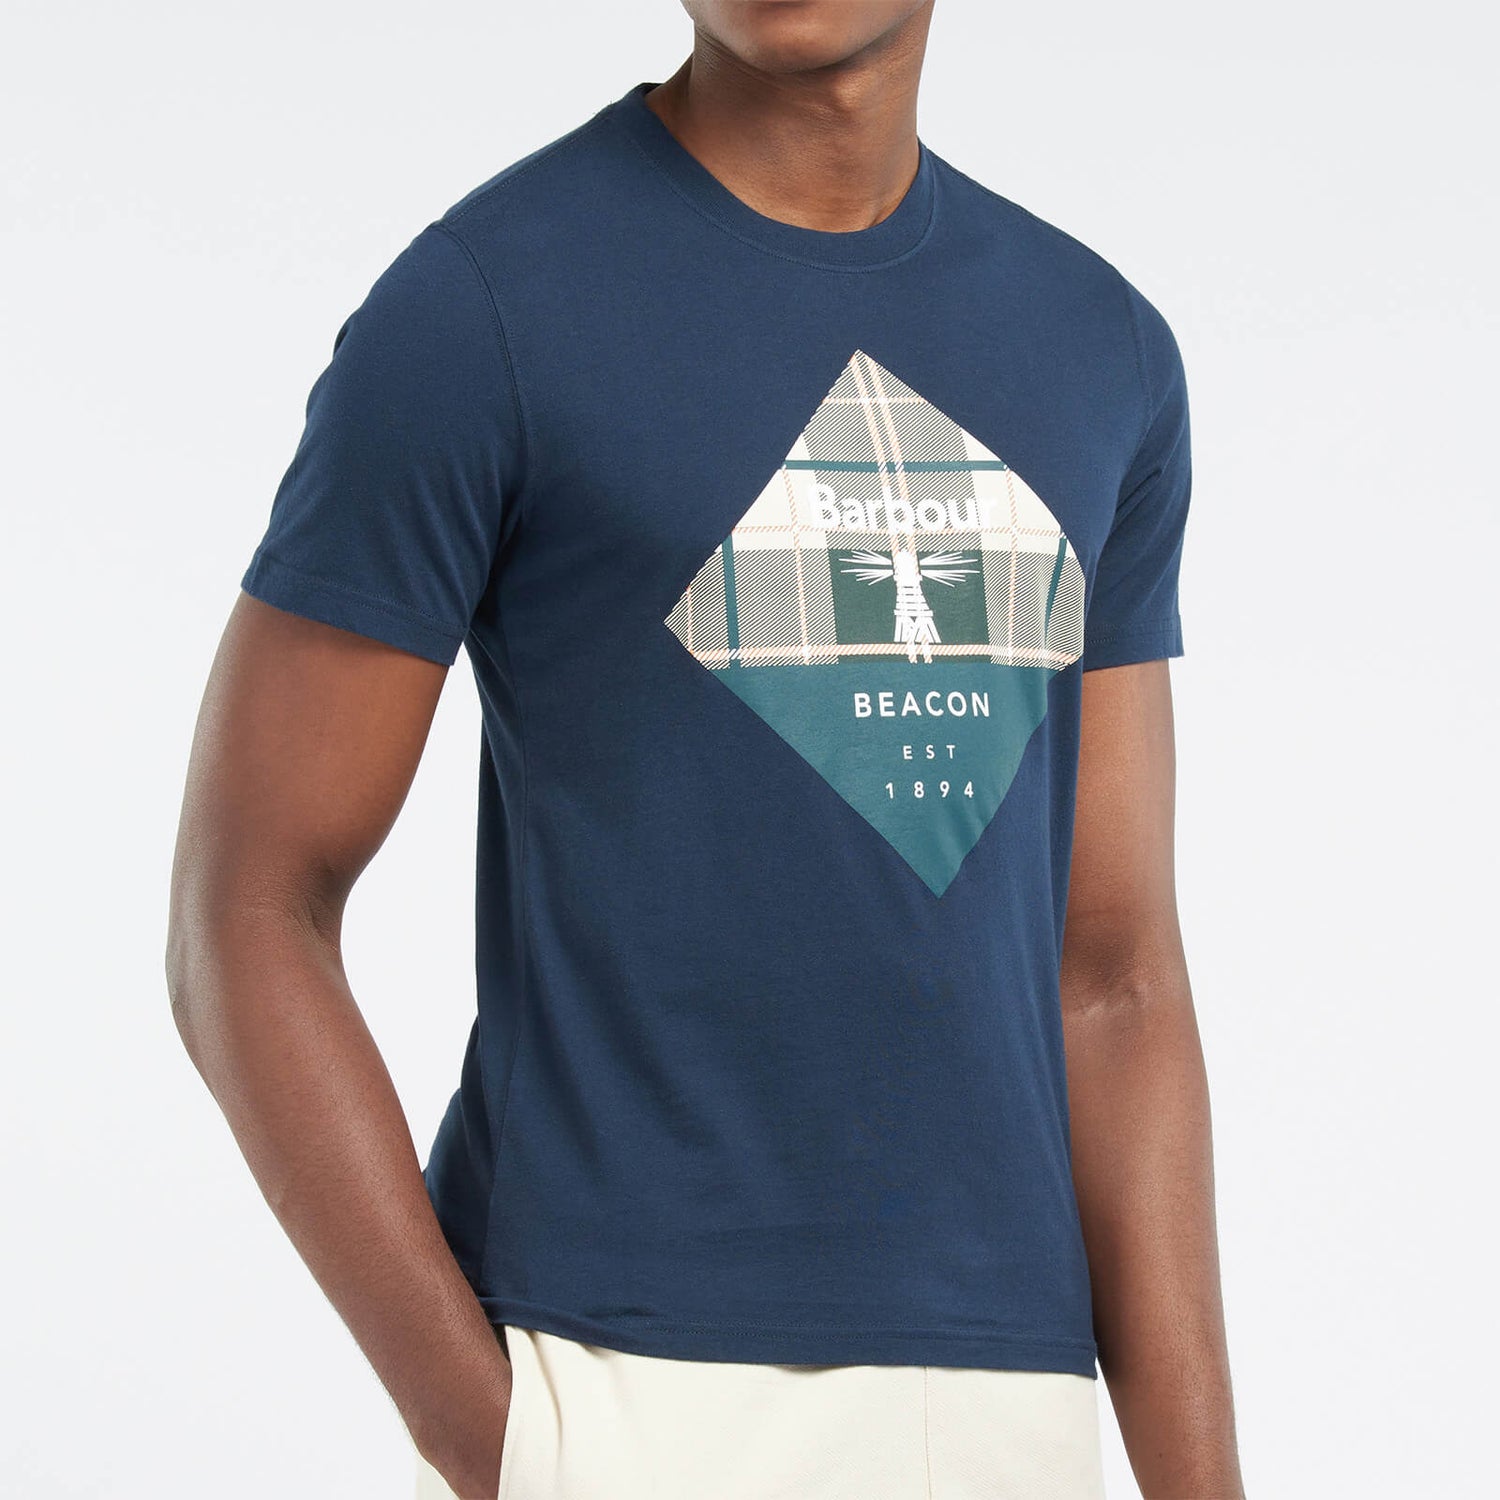 Barbour Beacon Men's Becker T-Shirt - Navy/Ancient